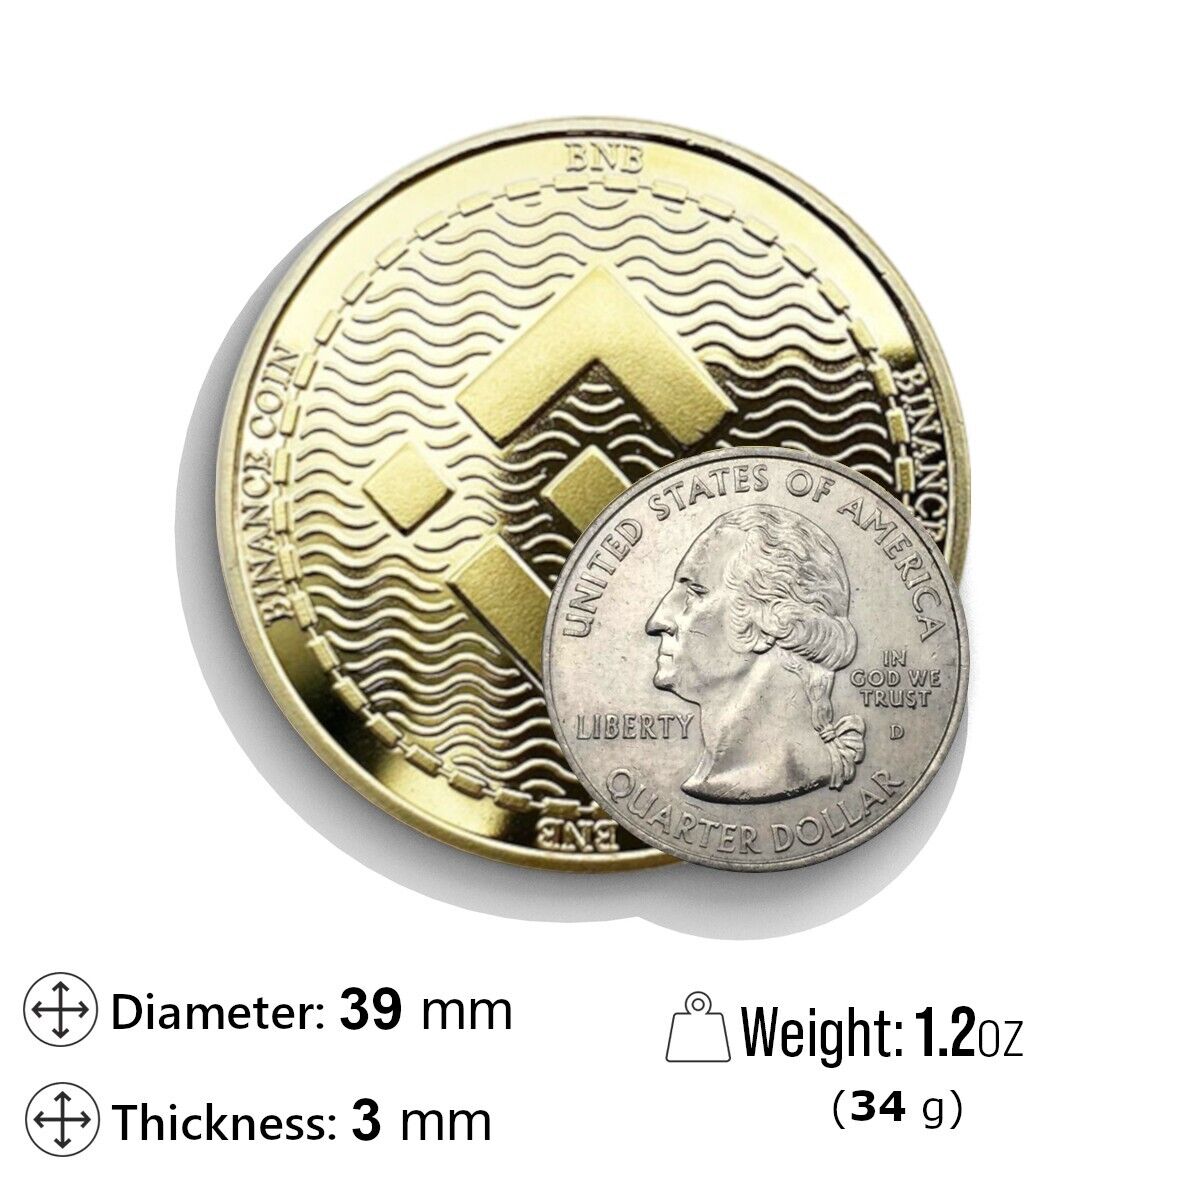 NEAR Protocol 18K Gold Plated 2022 Edition Physical Crypto Coin Novelty Souvenir